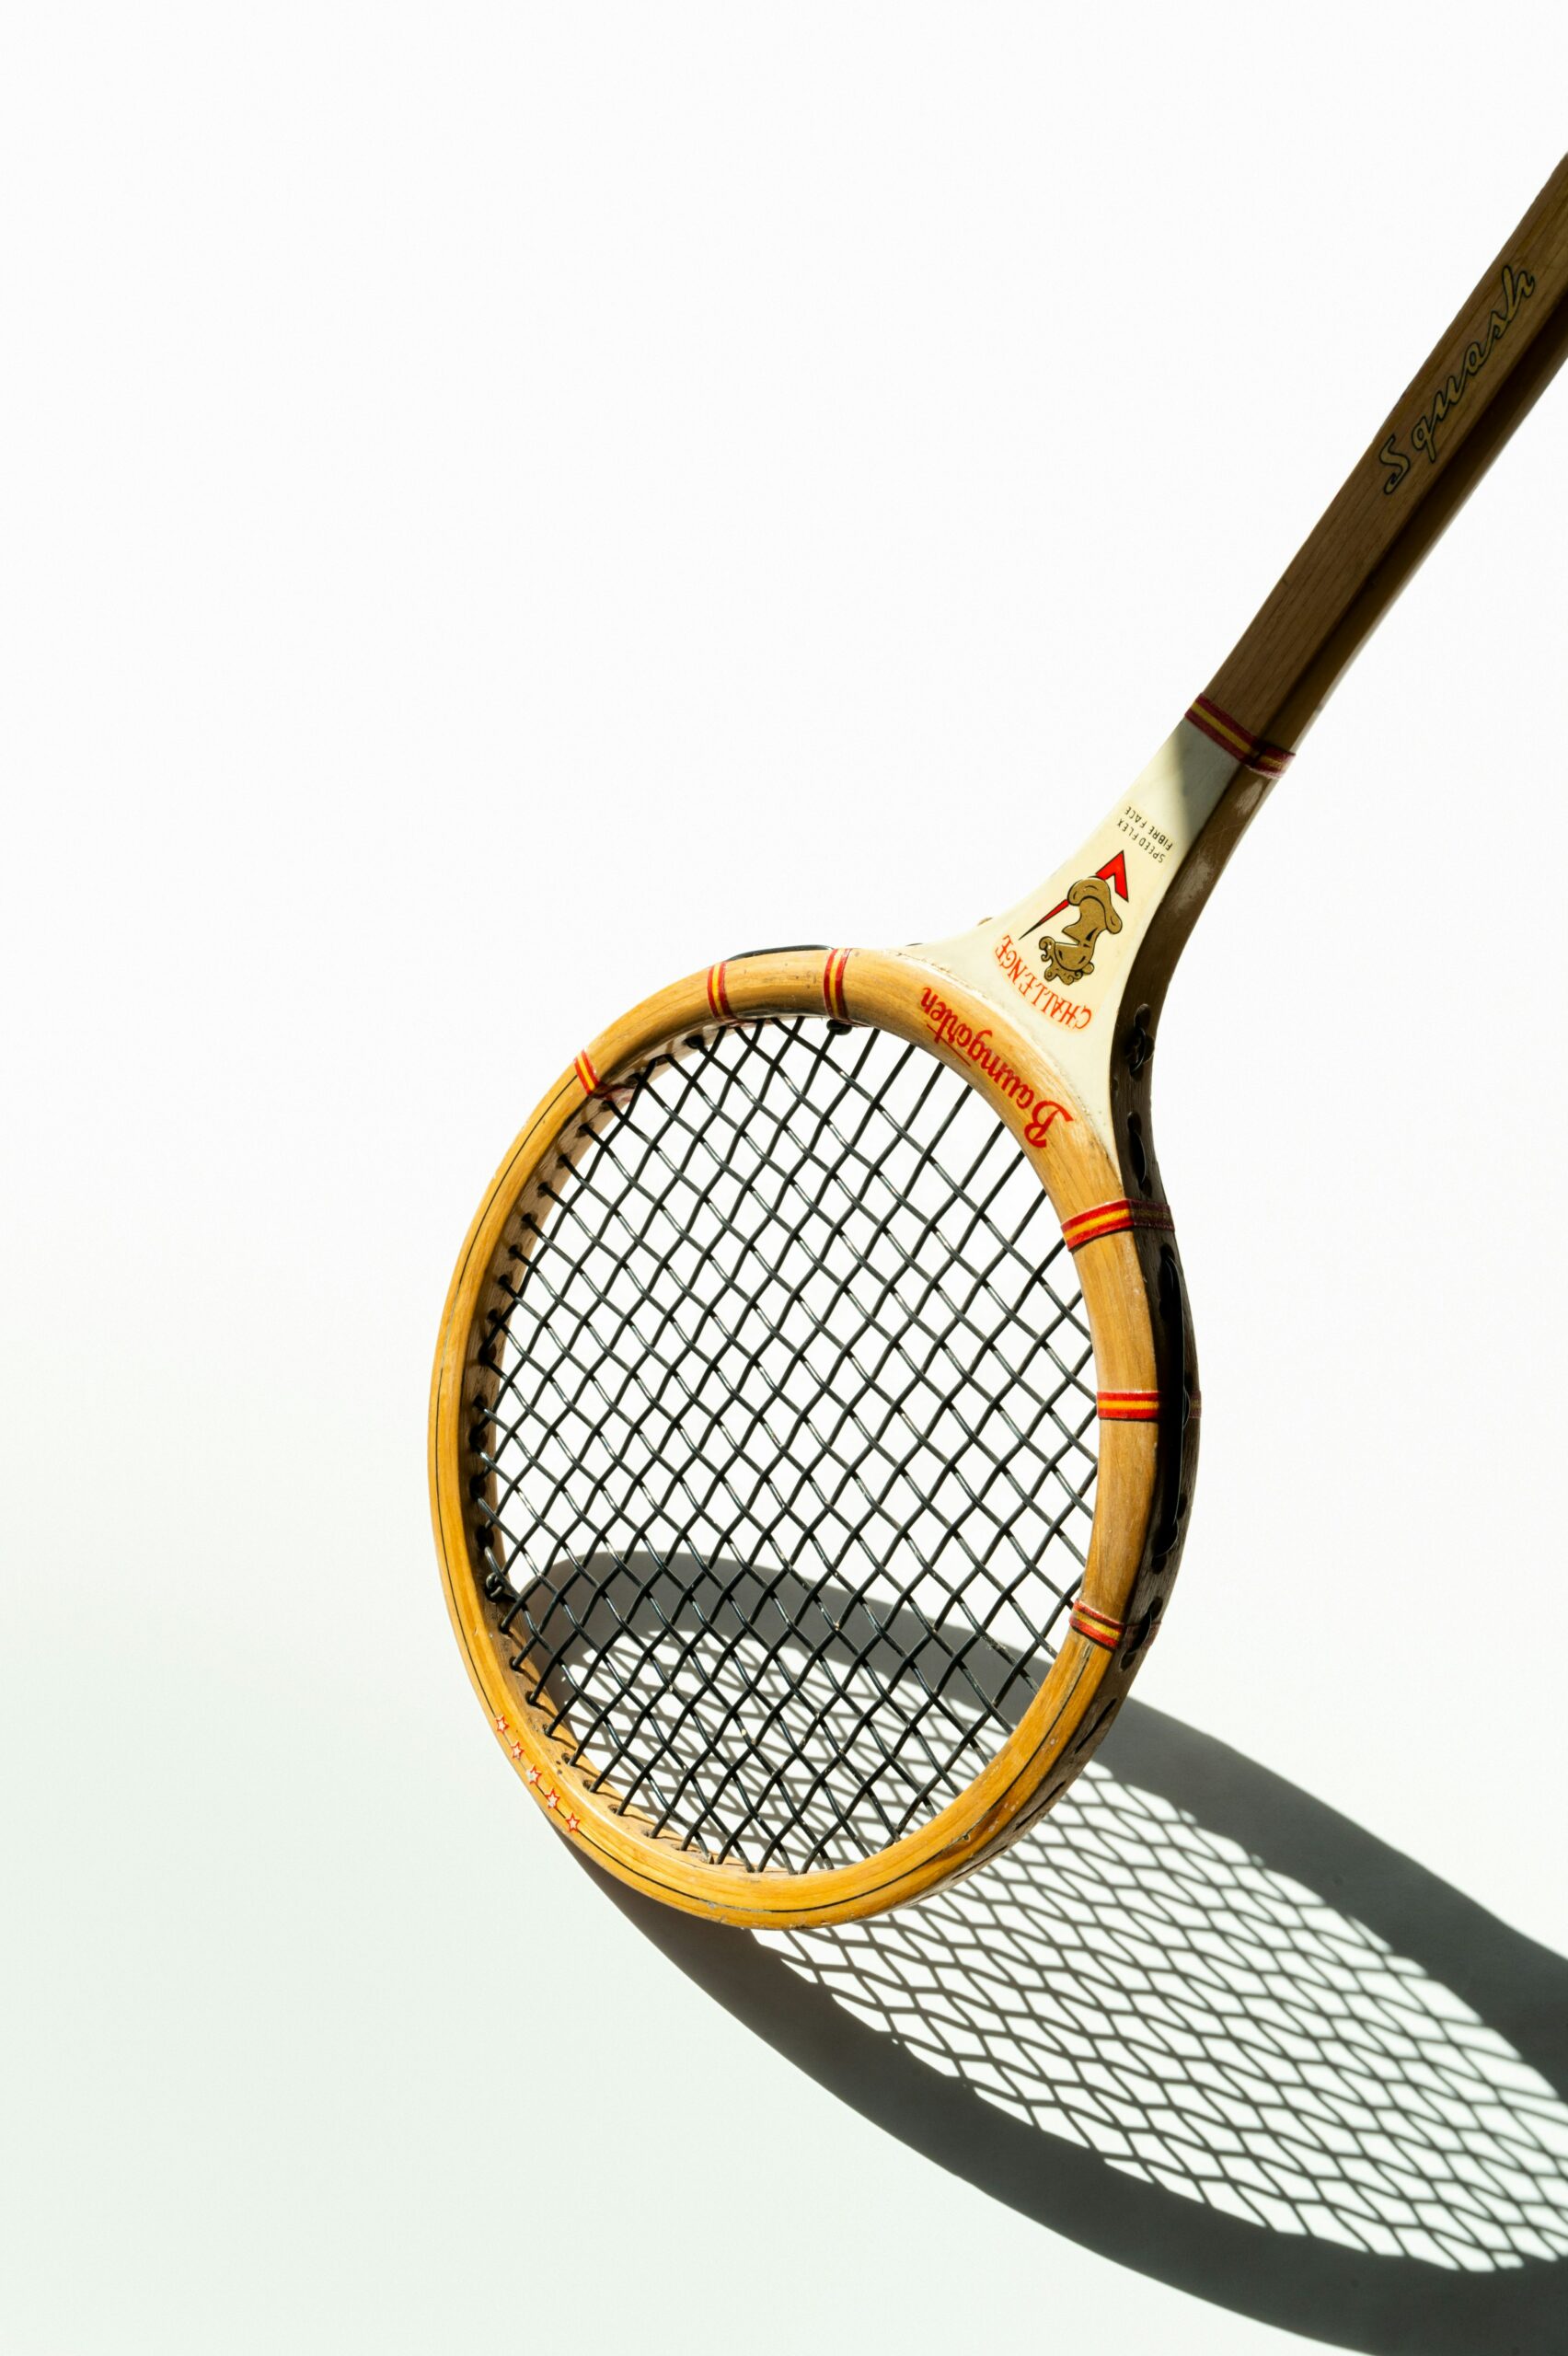 Is Squash an Elitist Sport